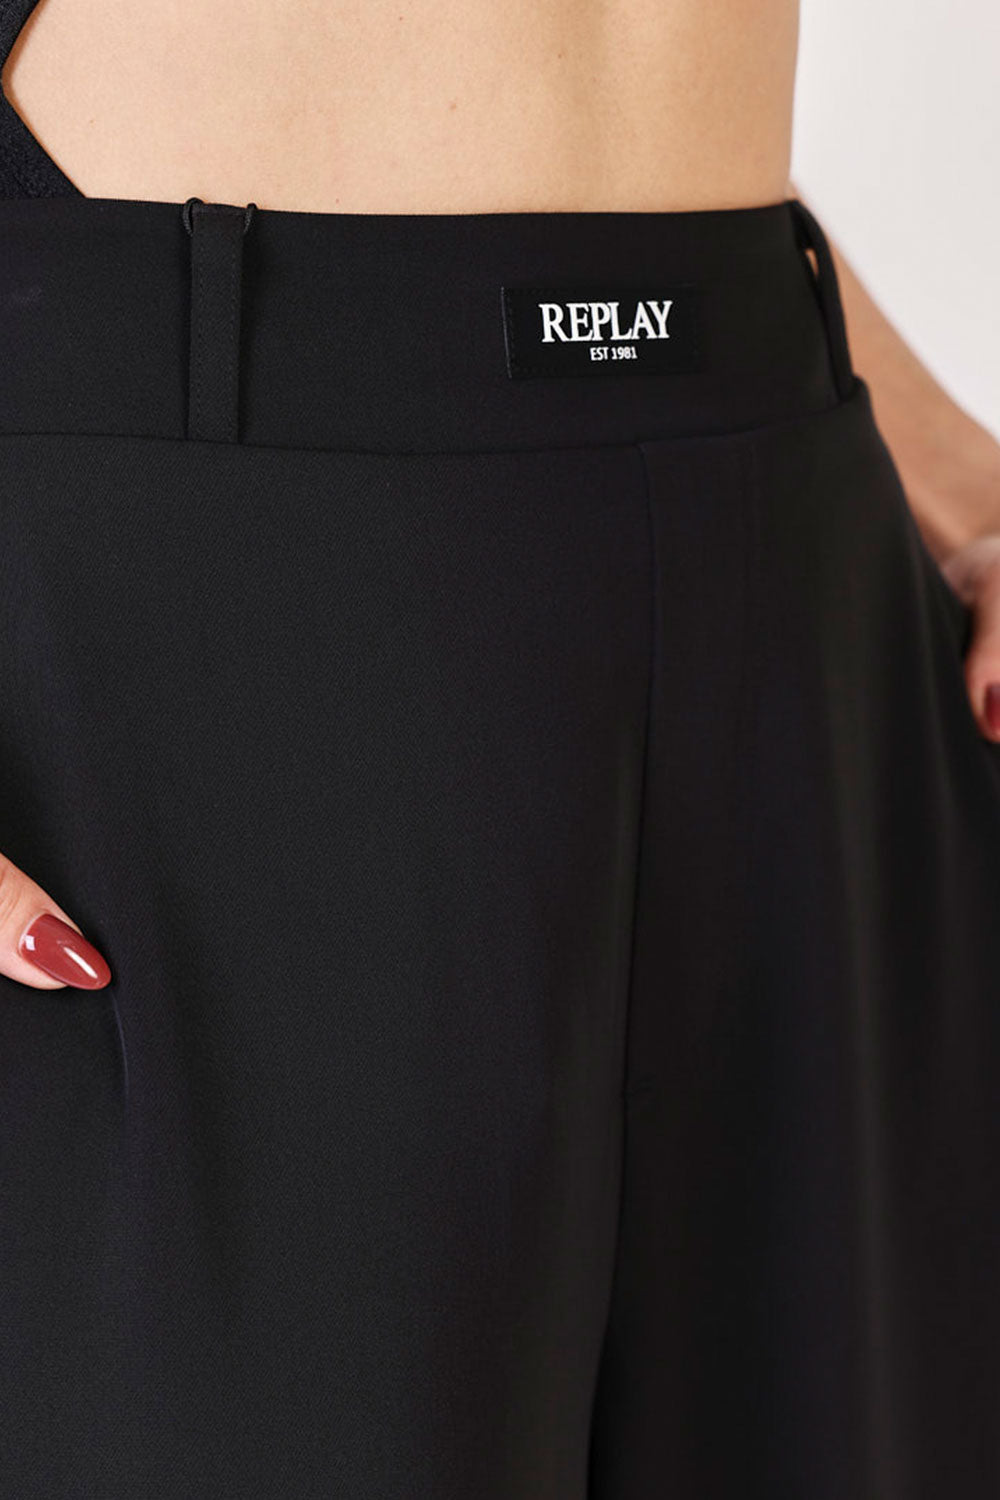 Replay מכנסי דגמ"ח ארוכים Honest בצבע שחור לנשים-Replay-XS-נאקו